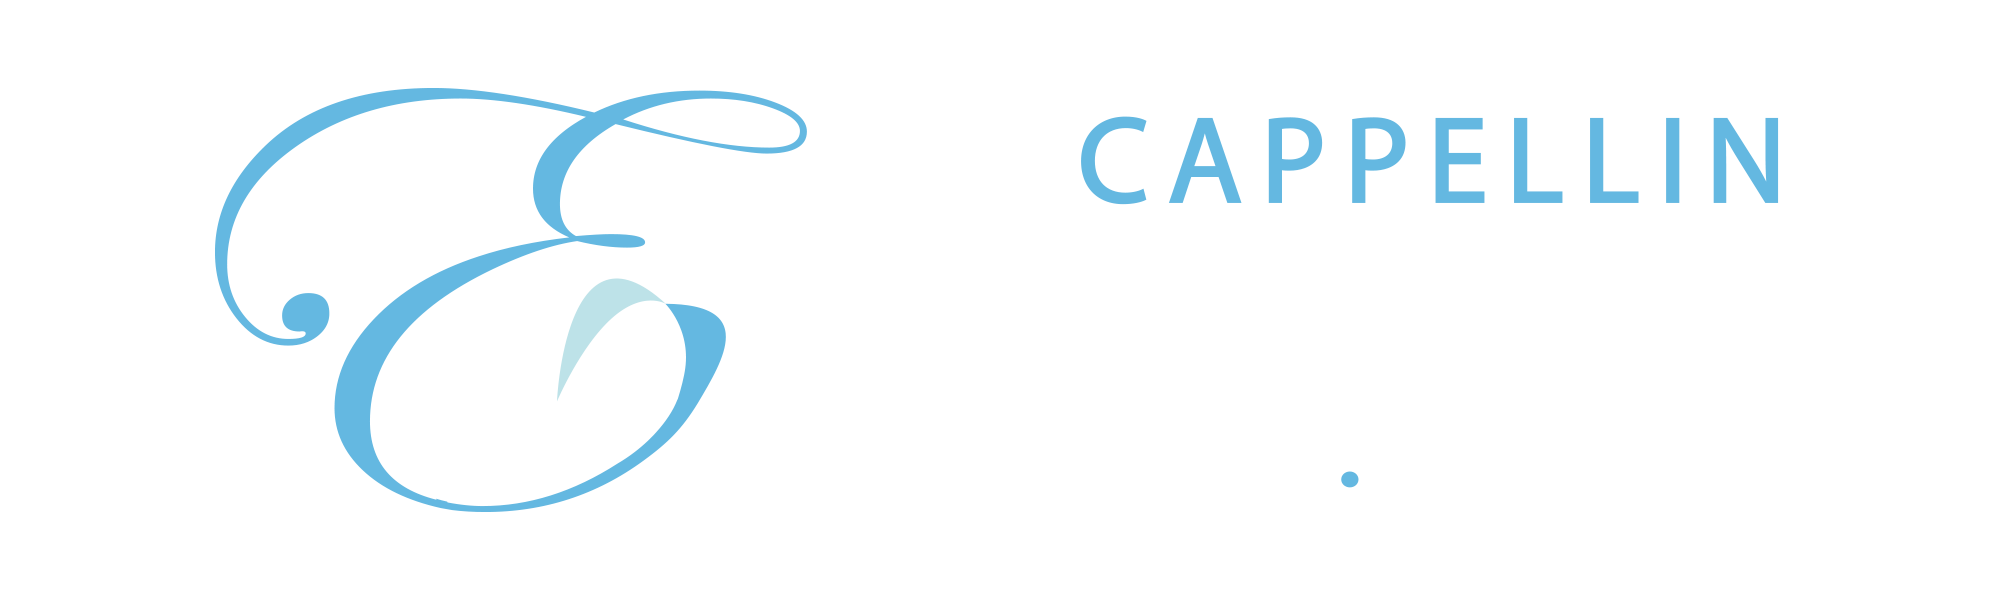 Cappellin Education